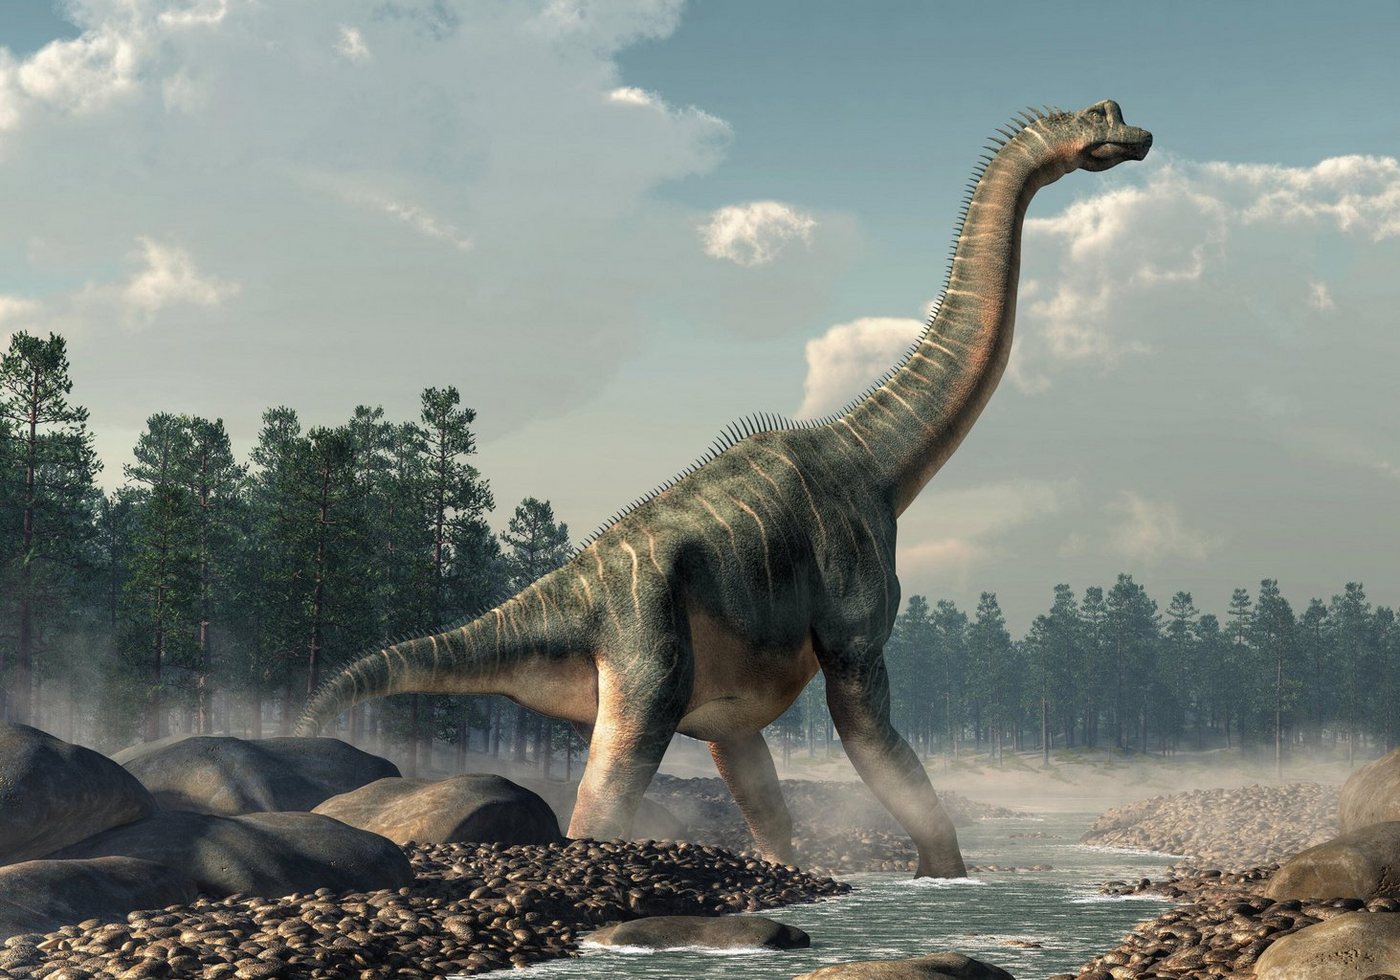 wandmotiv24 Fototapete Brachiosaurus Dino im Wasser, strukturiert, Wandtapete, Motivtapete, matt, Vinyltapete, selbstklebend von wandmotiv24